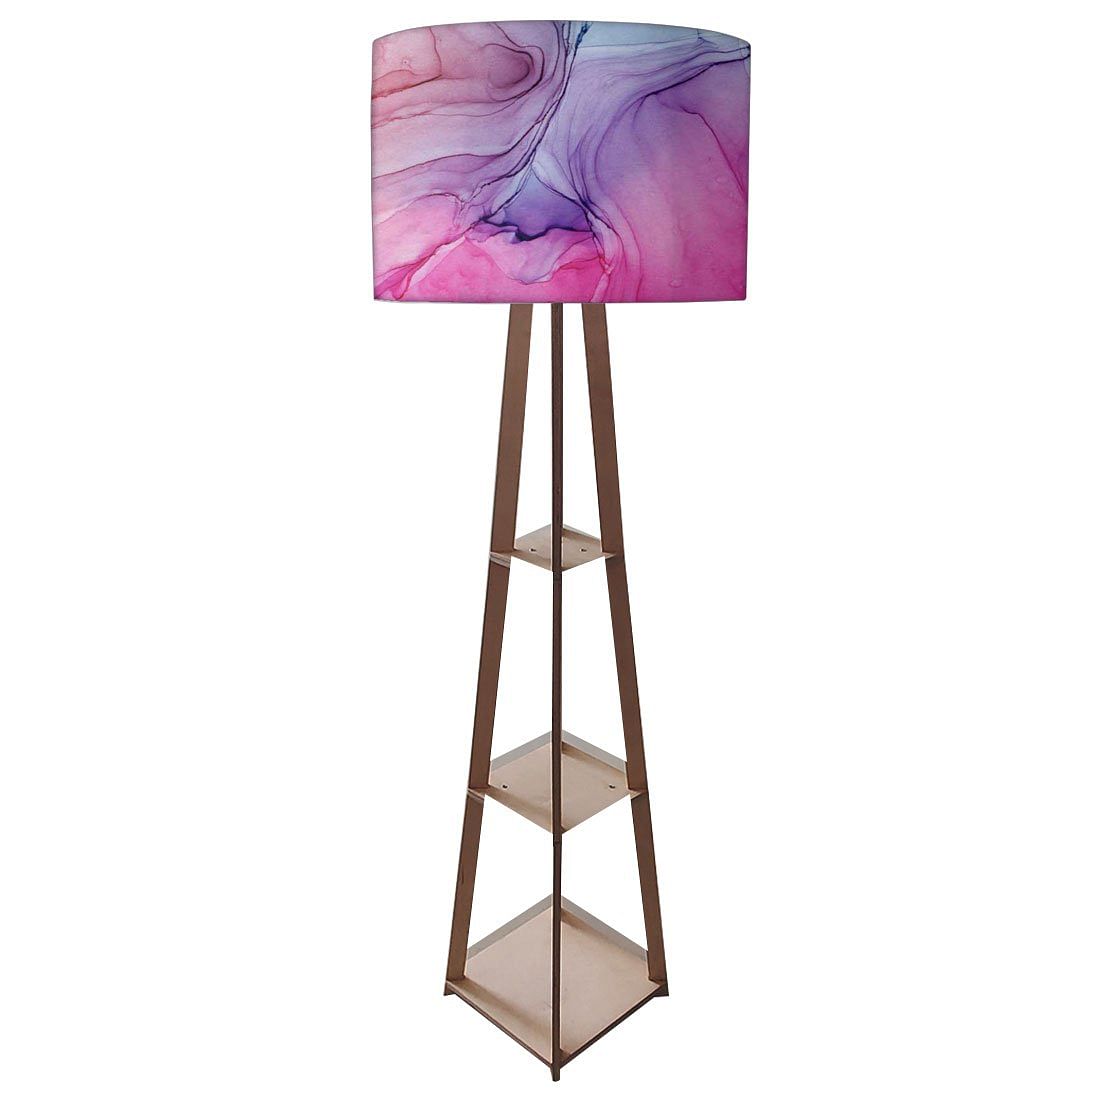 Wooden Floor Shelf Lamps for Living Room - Watercolor Nutcase